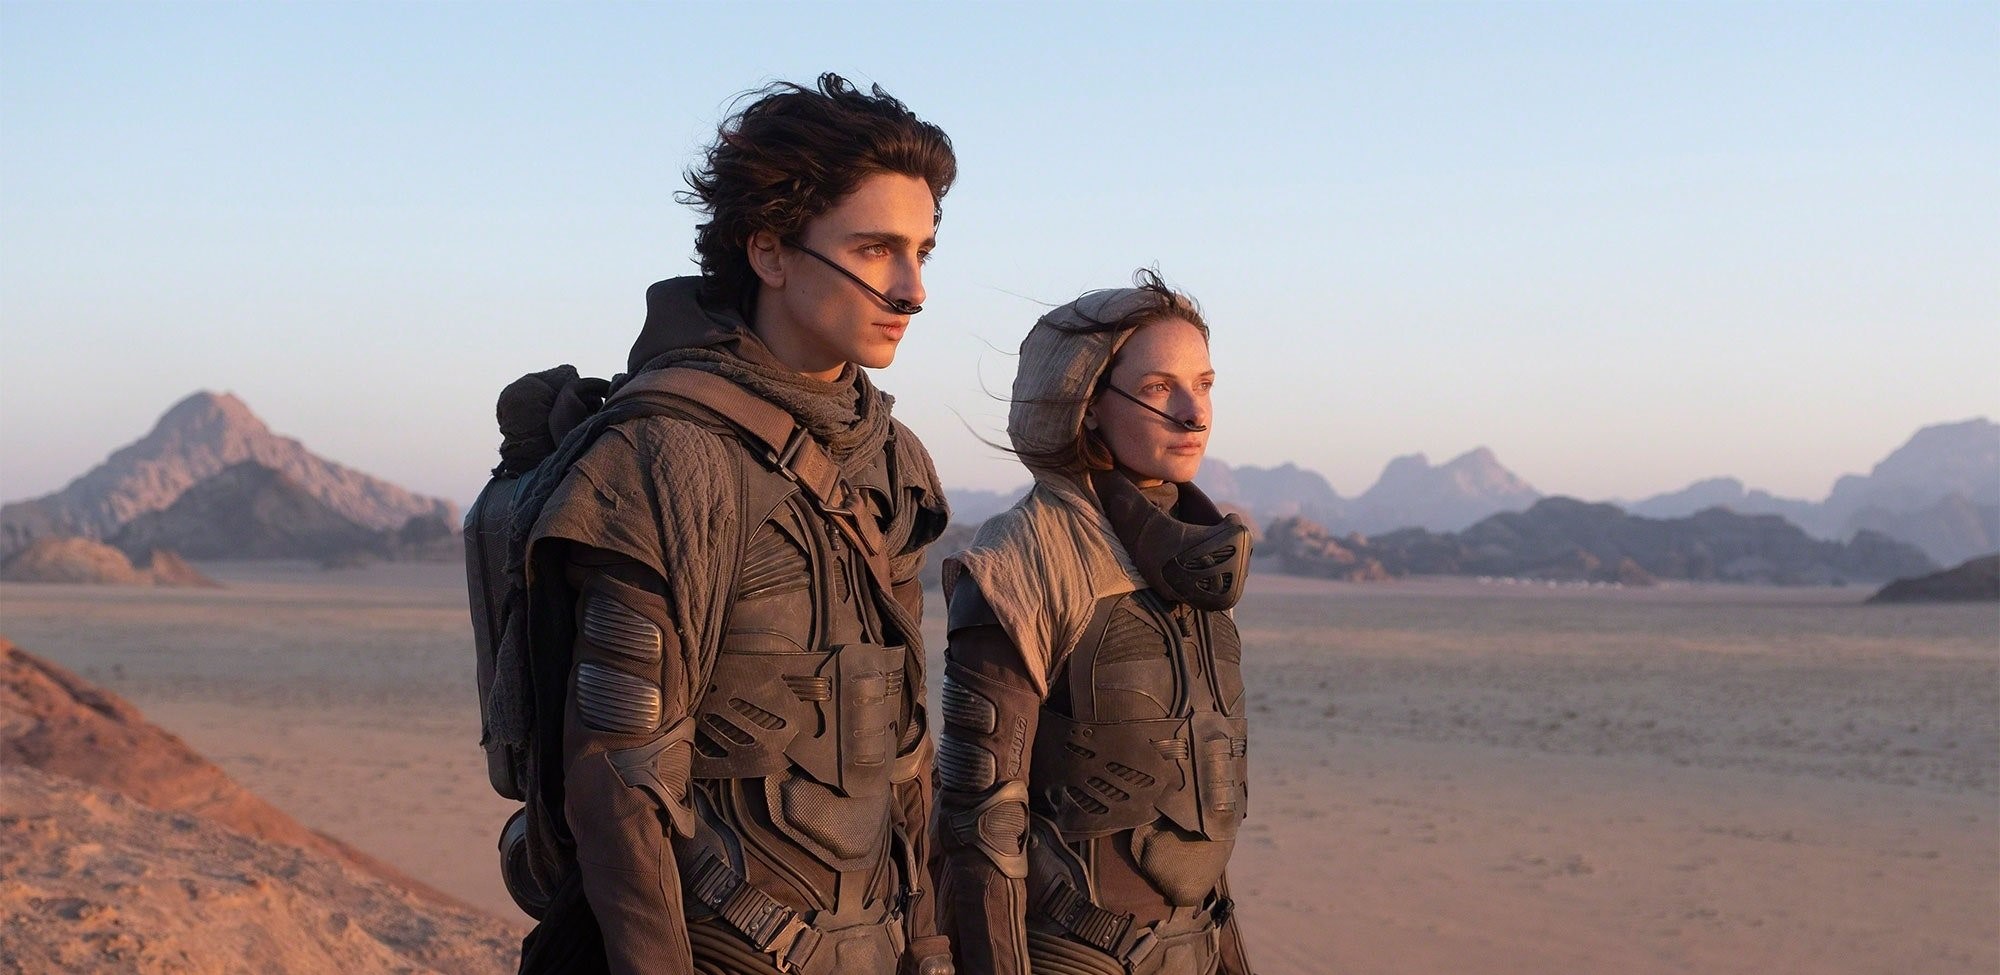 Is Dune on Netflix, HBO Max, Hulu, Disney+, or Prime?